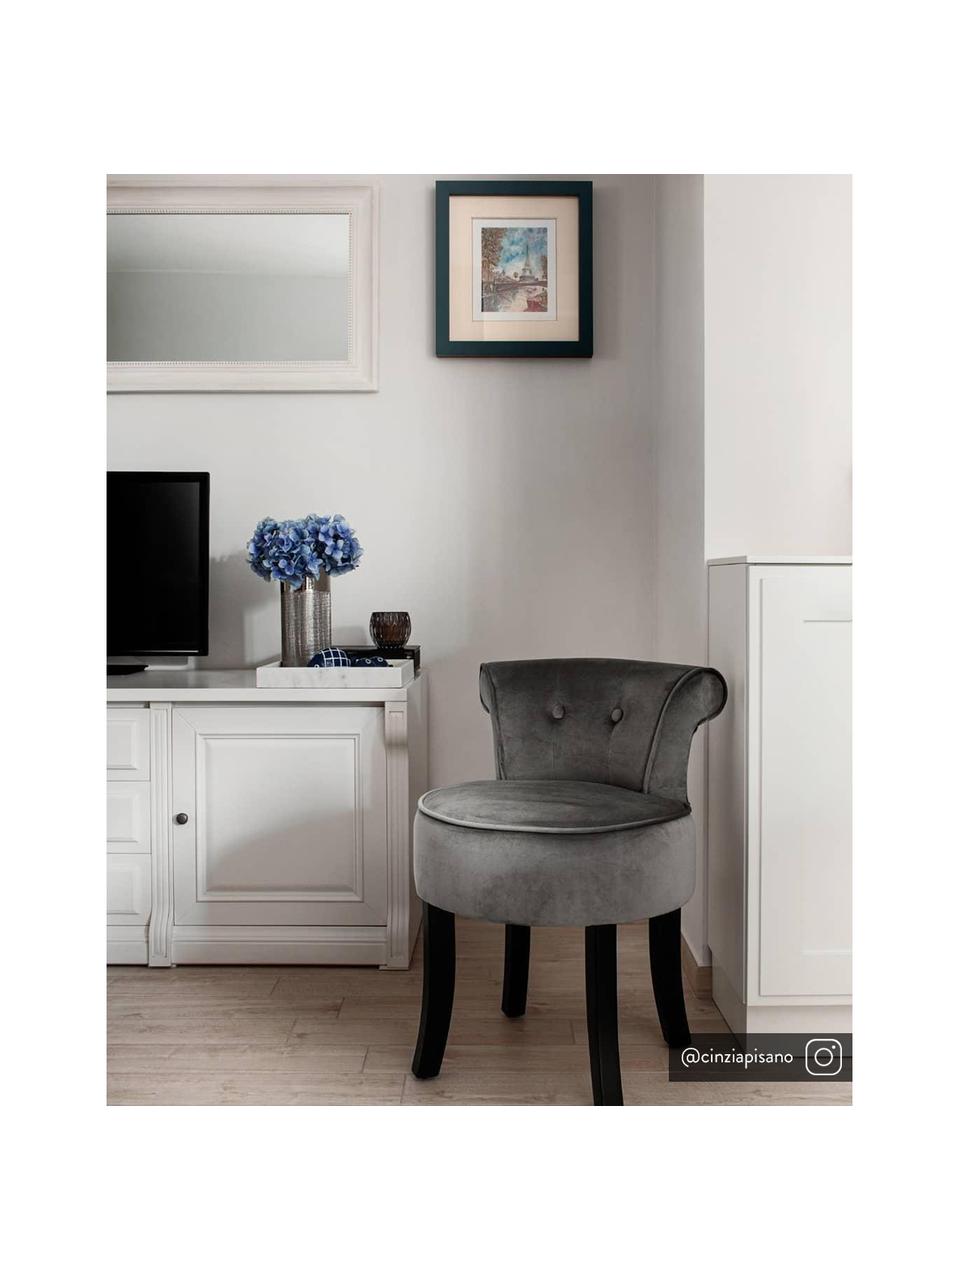 Sametová židlička s opěradlem Alison, Potah: šedá Nohy: černá, Š 48 cm, V 65 cm